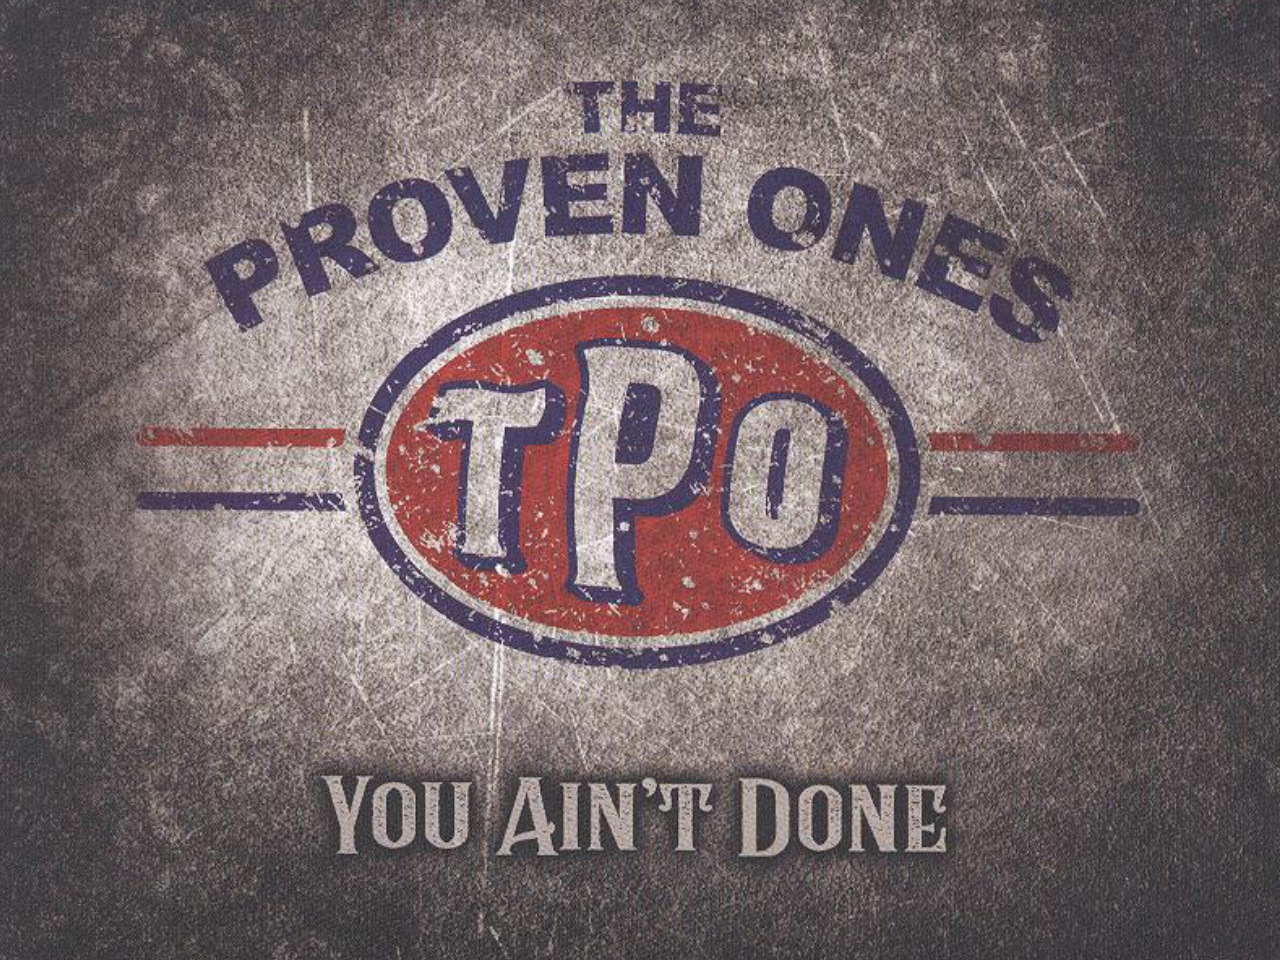 the proven ones - Okładka albumu